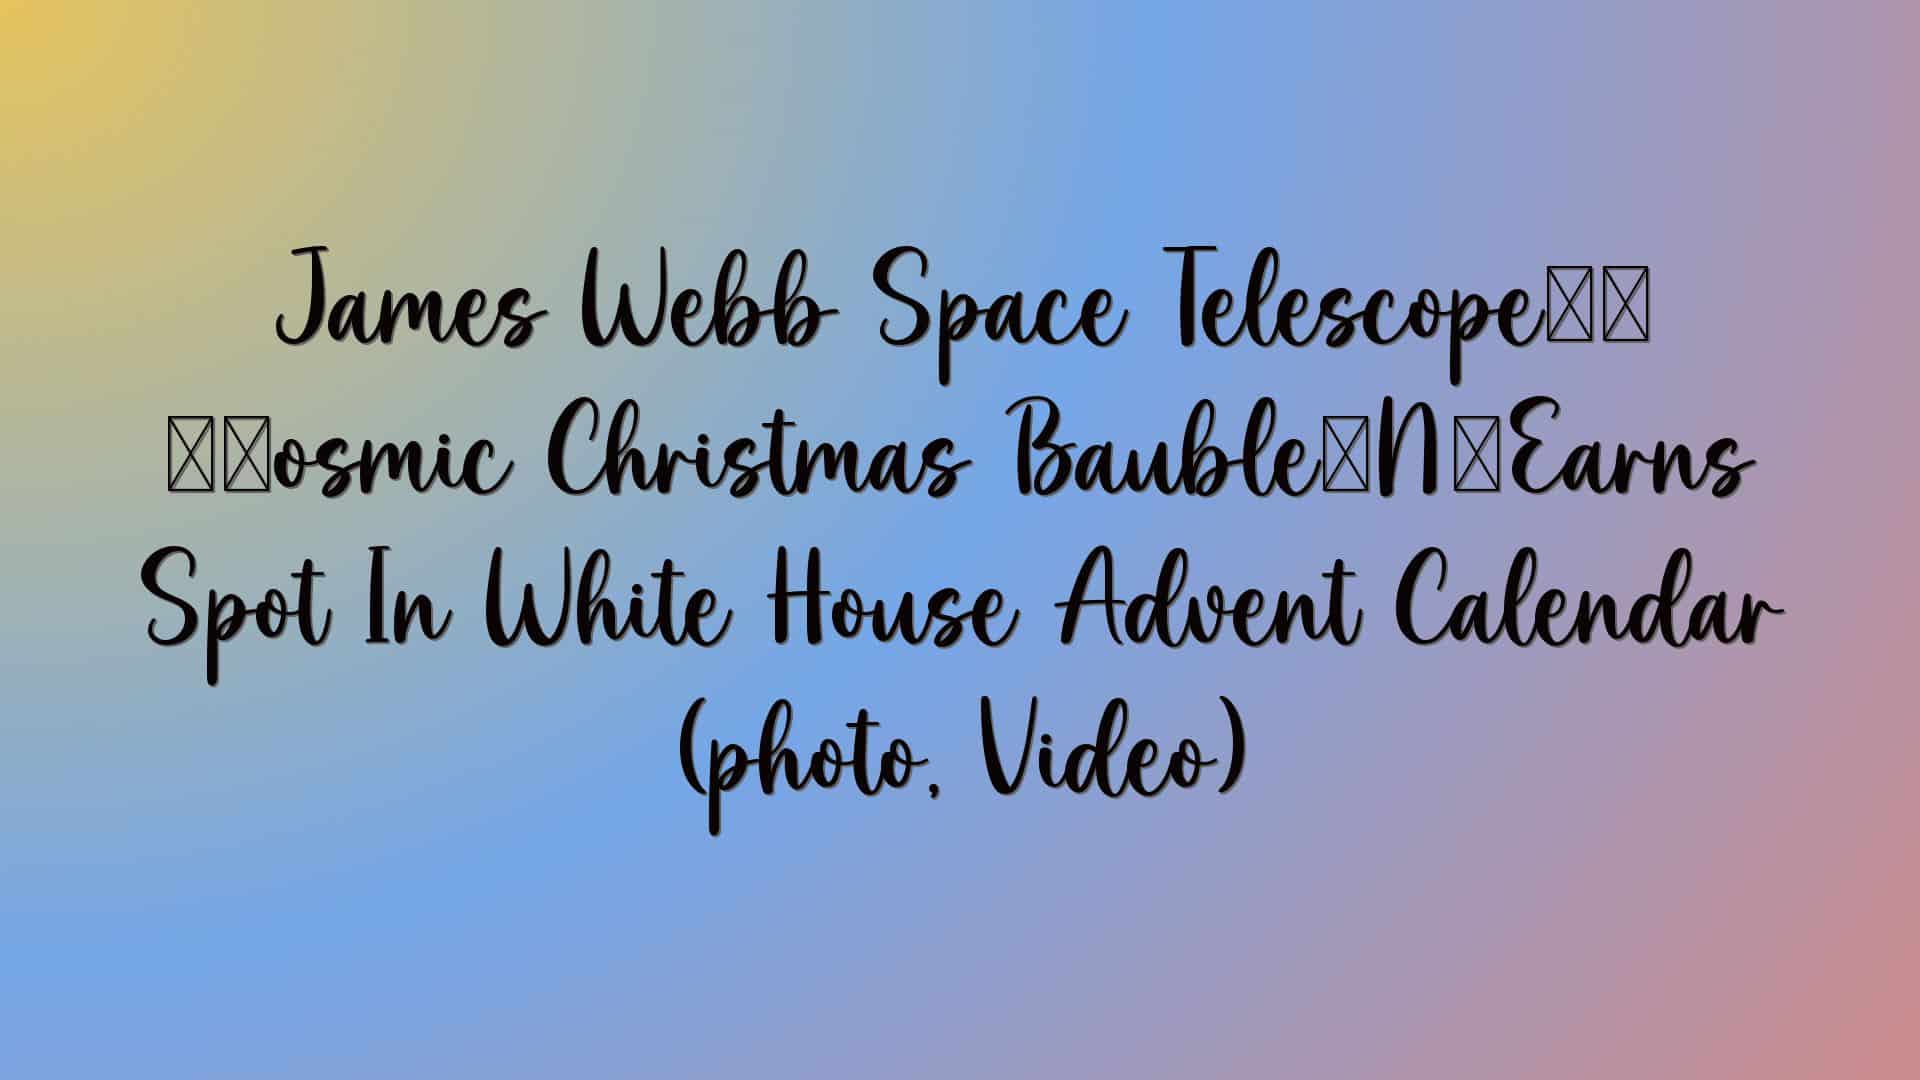 James Webb Space Telescope’s ‘Cosmic Christmas Bauble’ Earns Spot In White House Advent Calendar (photo, Video)